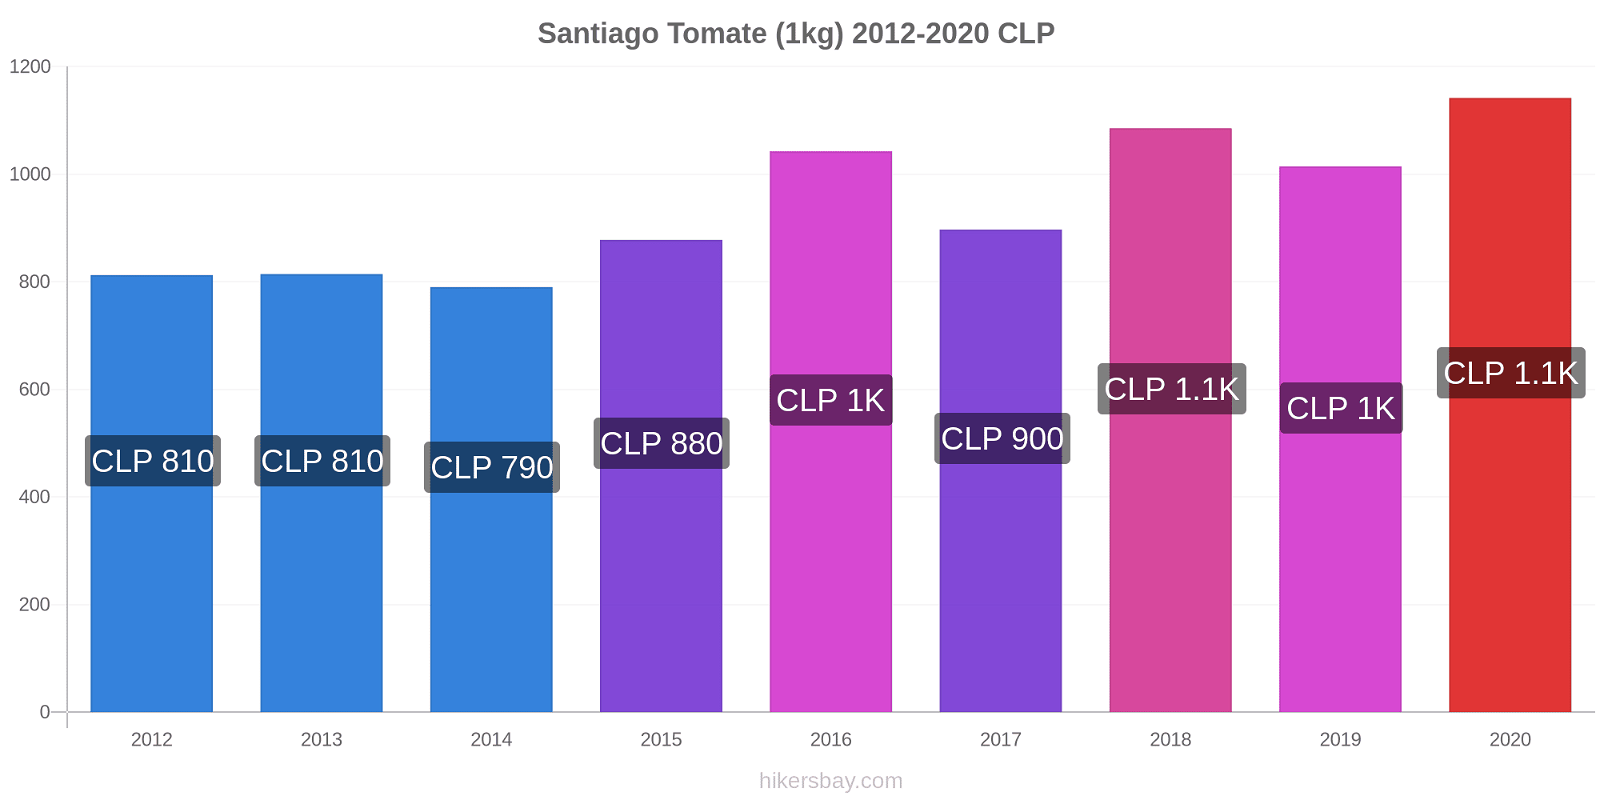 Santiago changements de prix Tomate (1kg) hikersbay.com